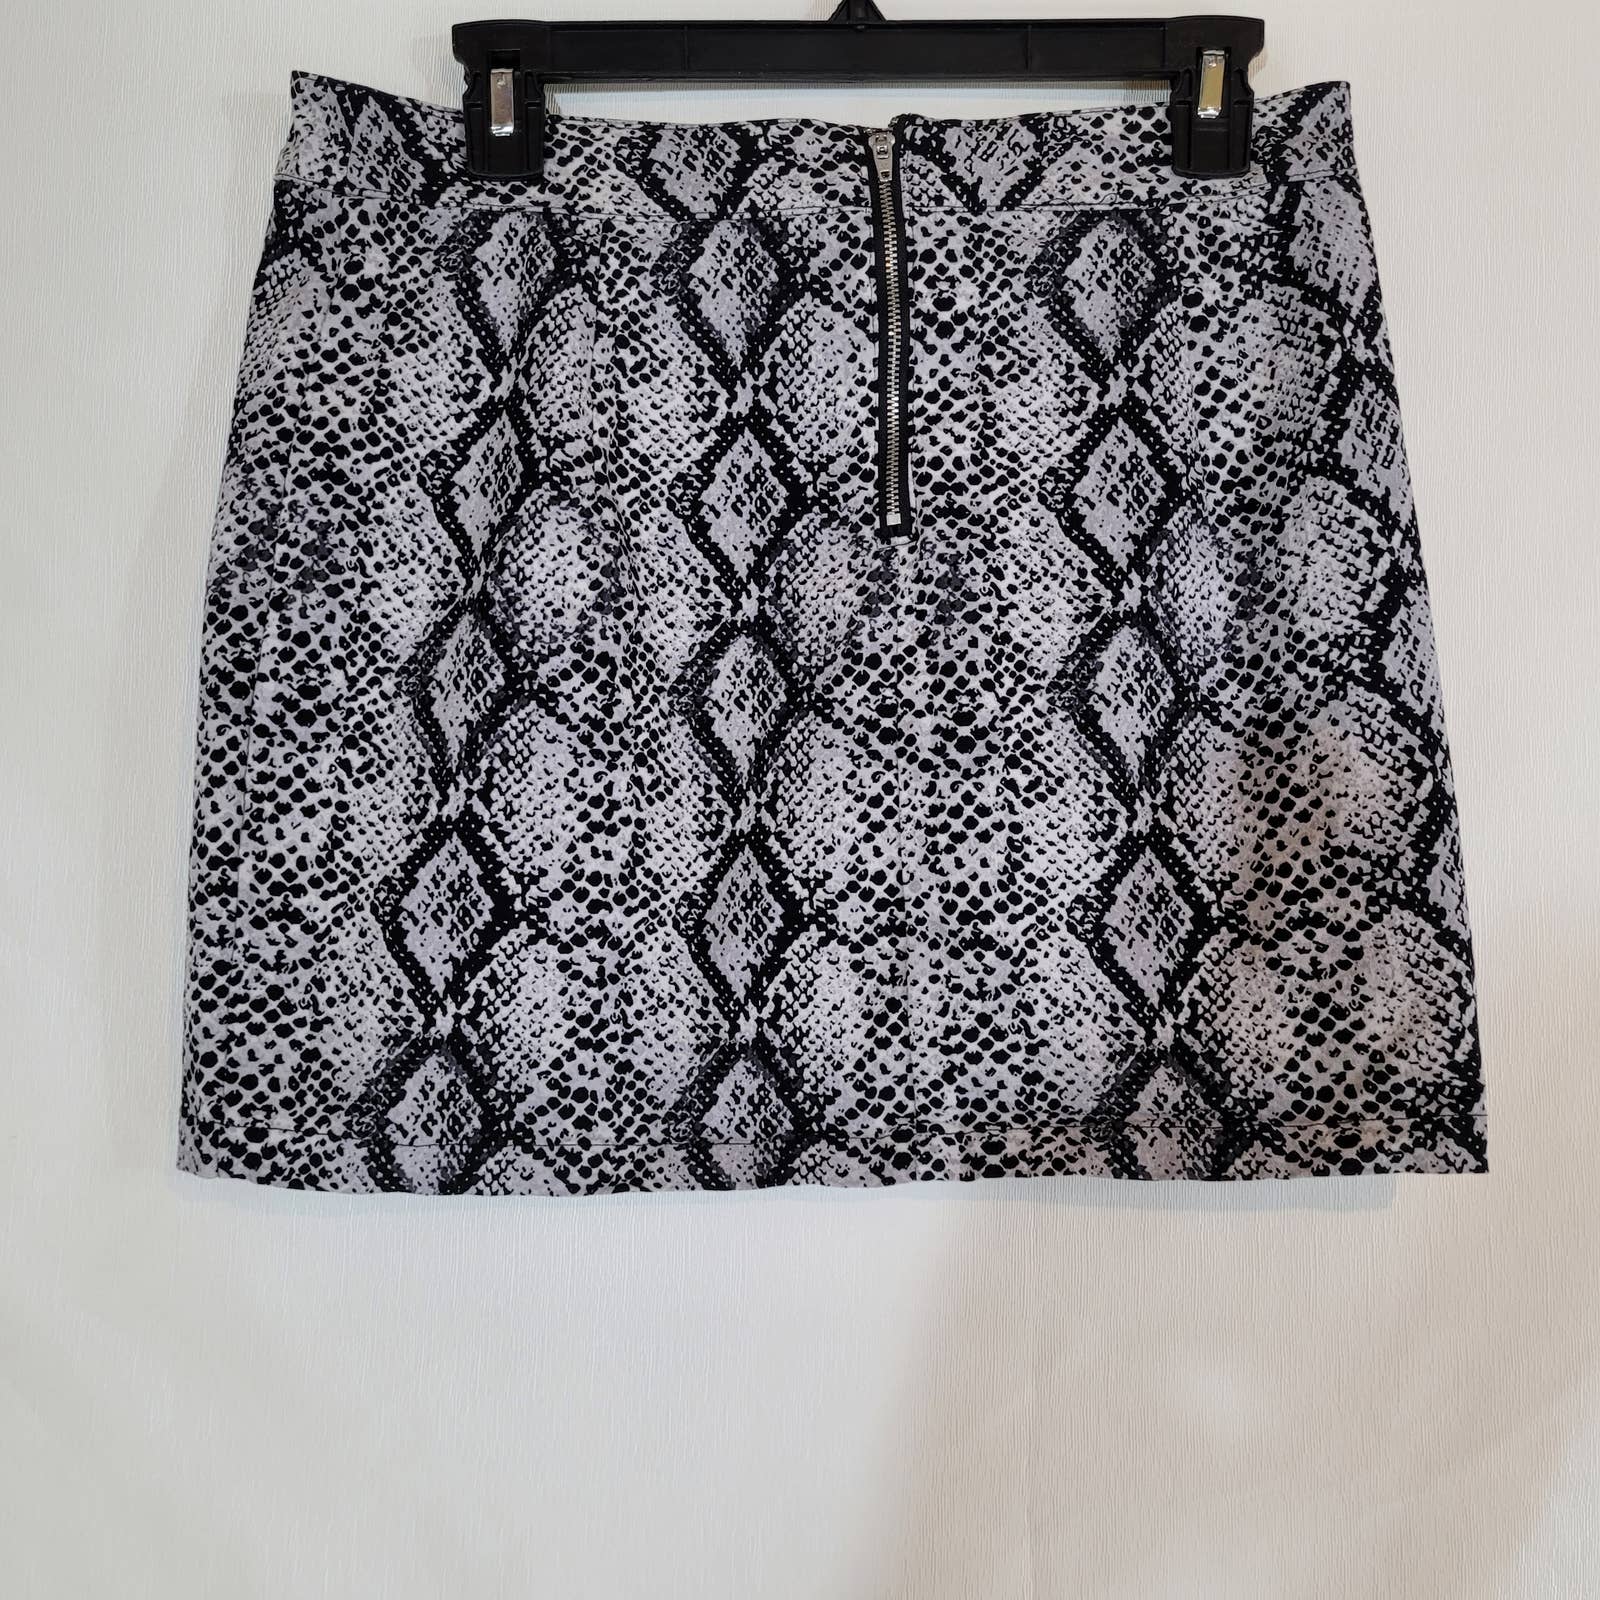 Garage Snakeskin Mini Skirt - Size LargeMarkita's ClosetGarage